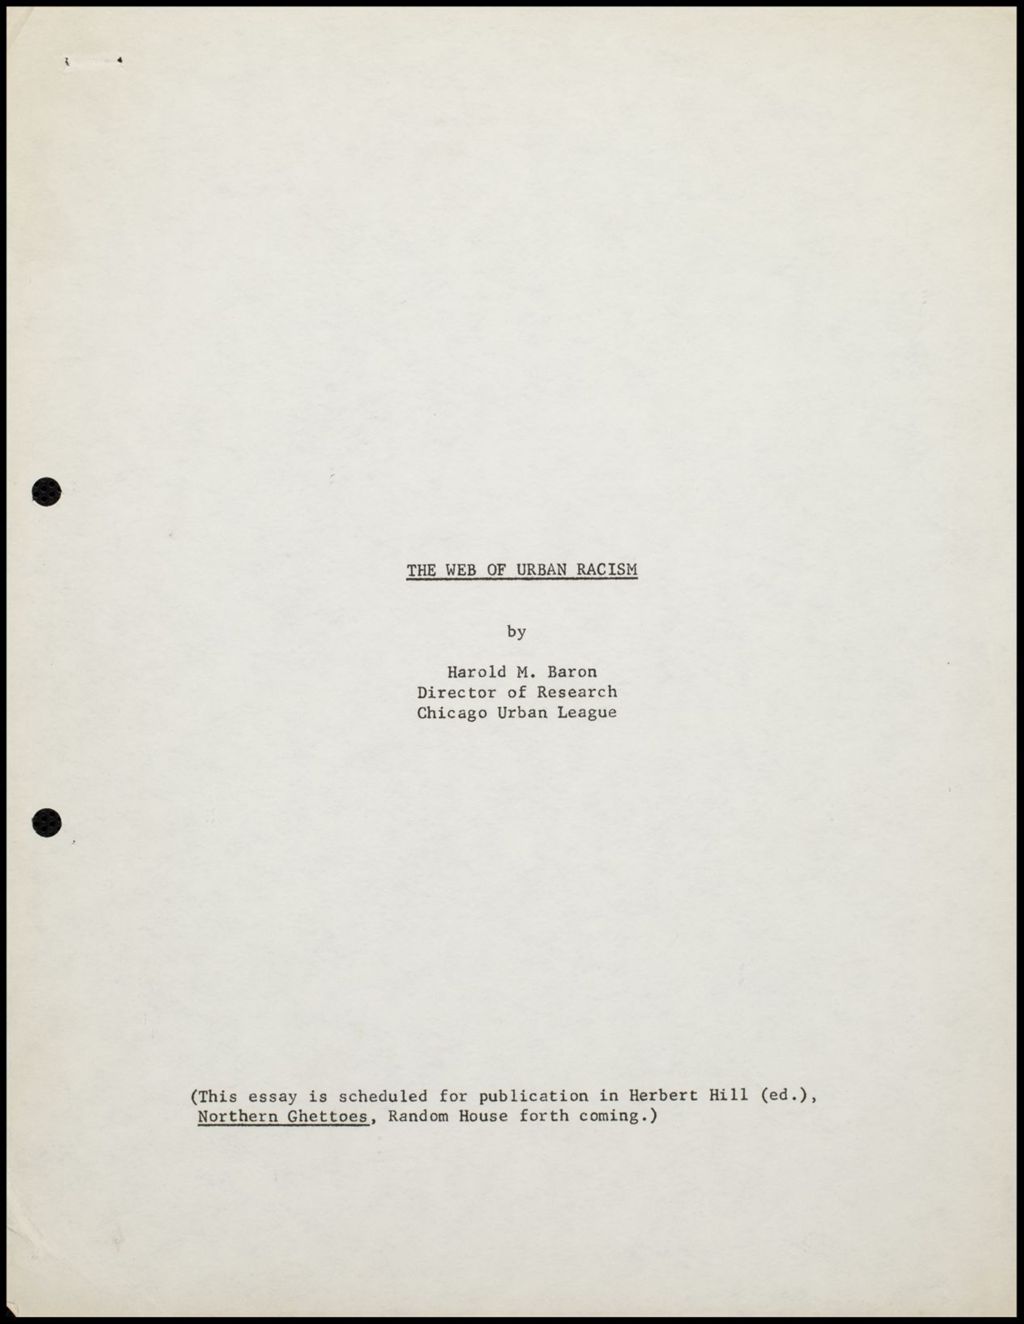 CUL report Negro's in Policy Making, 1968 (Folder III-2486)